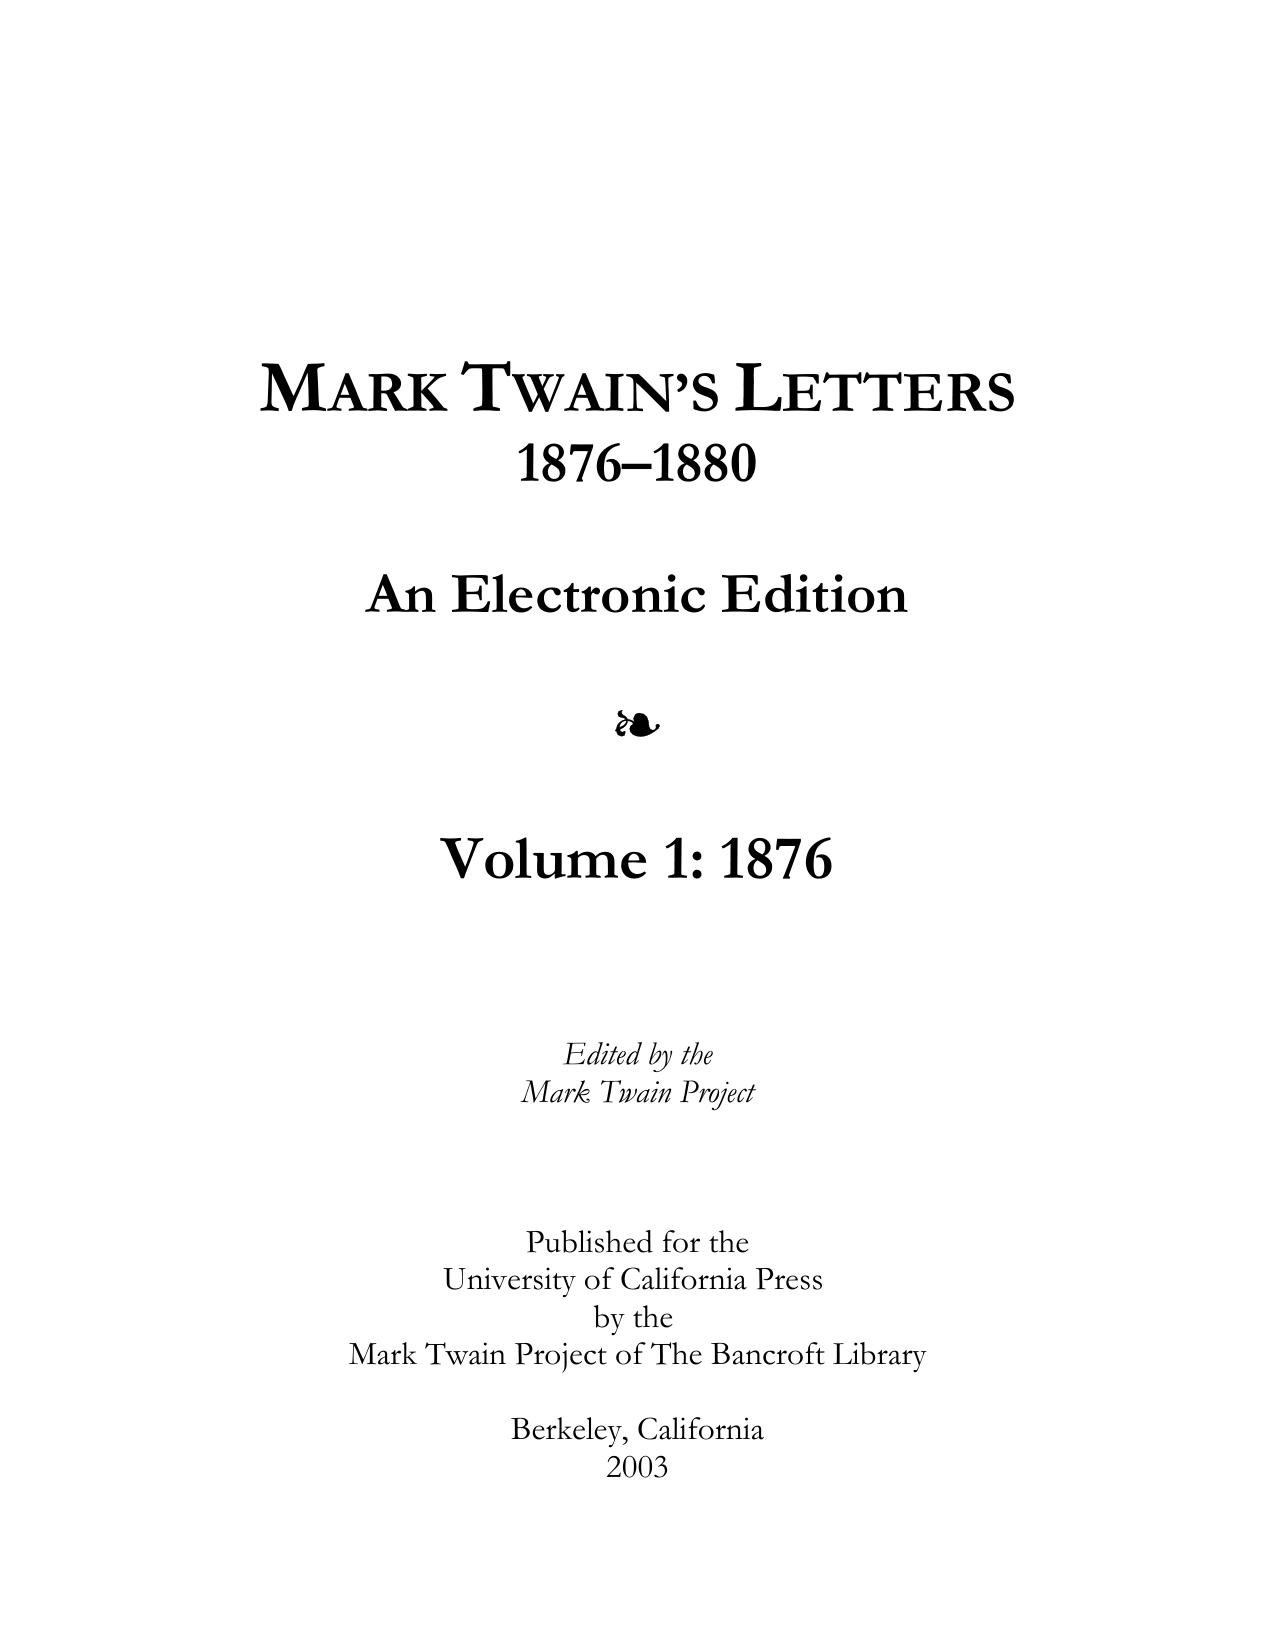 Mark Twain's Letters, 1876-1880, An Electronic Edition, Volume 1: 1876, © 2001 The Mark Twain Foundation